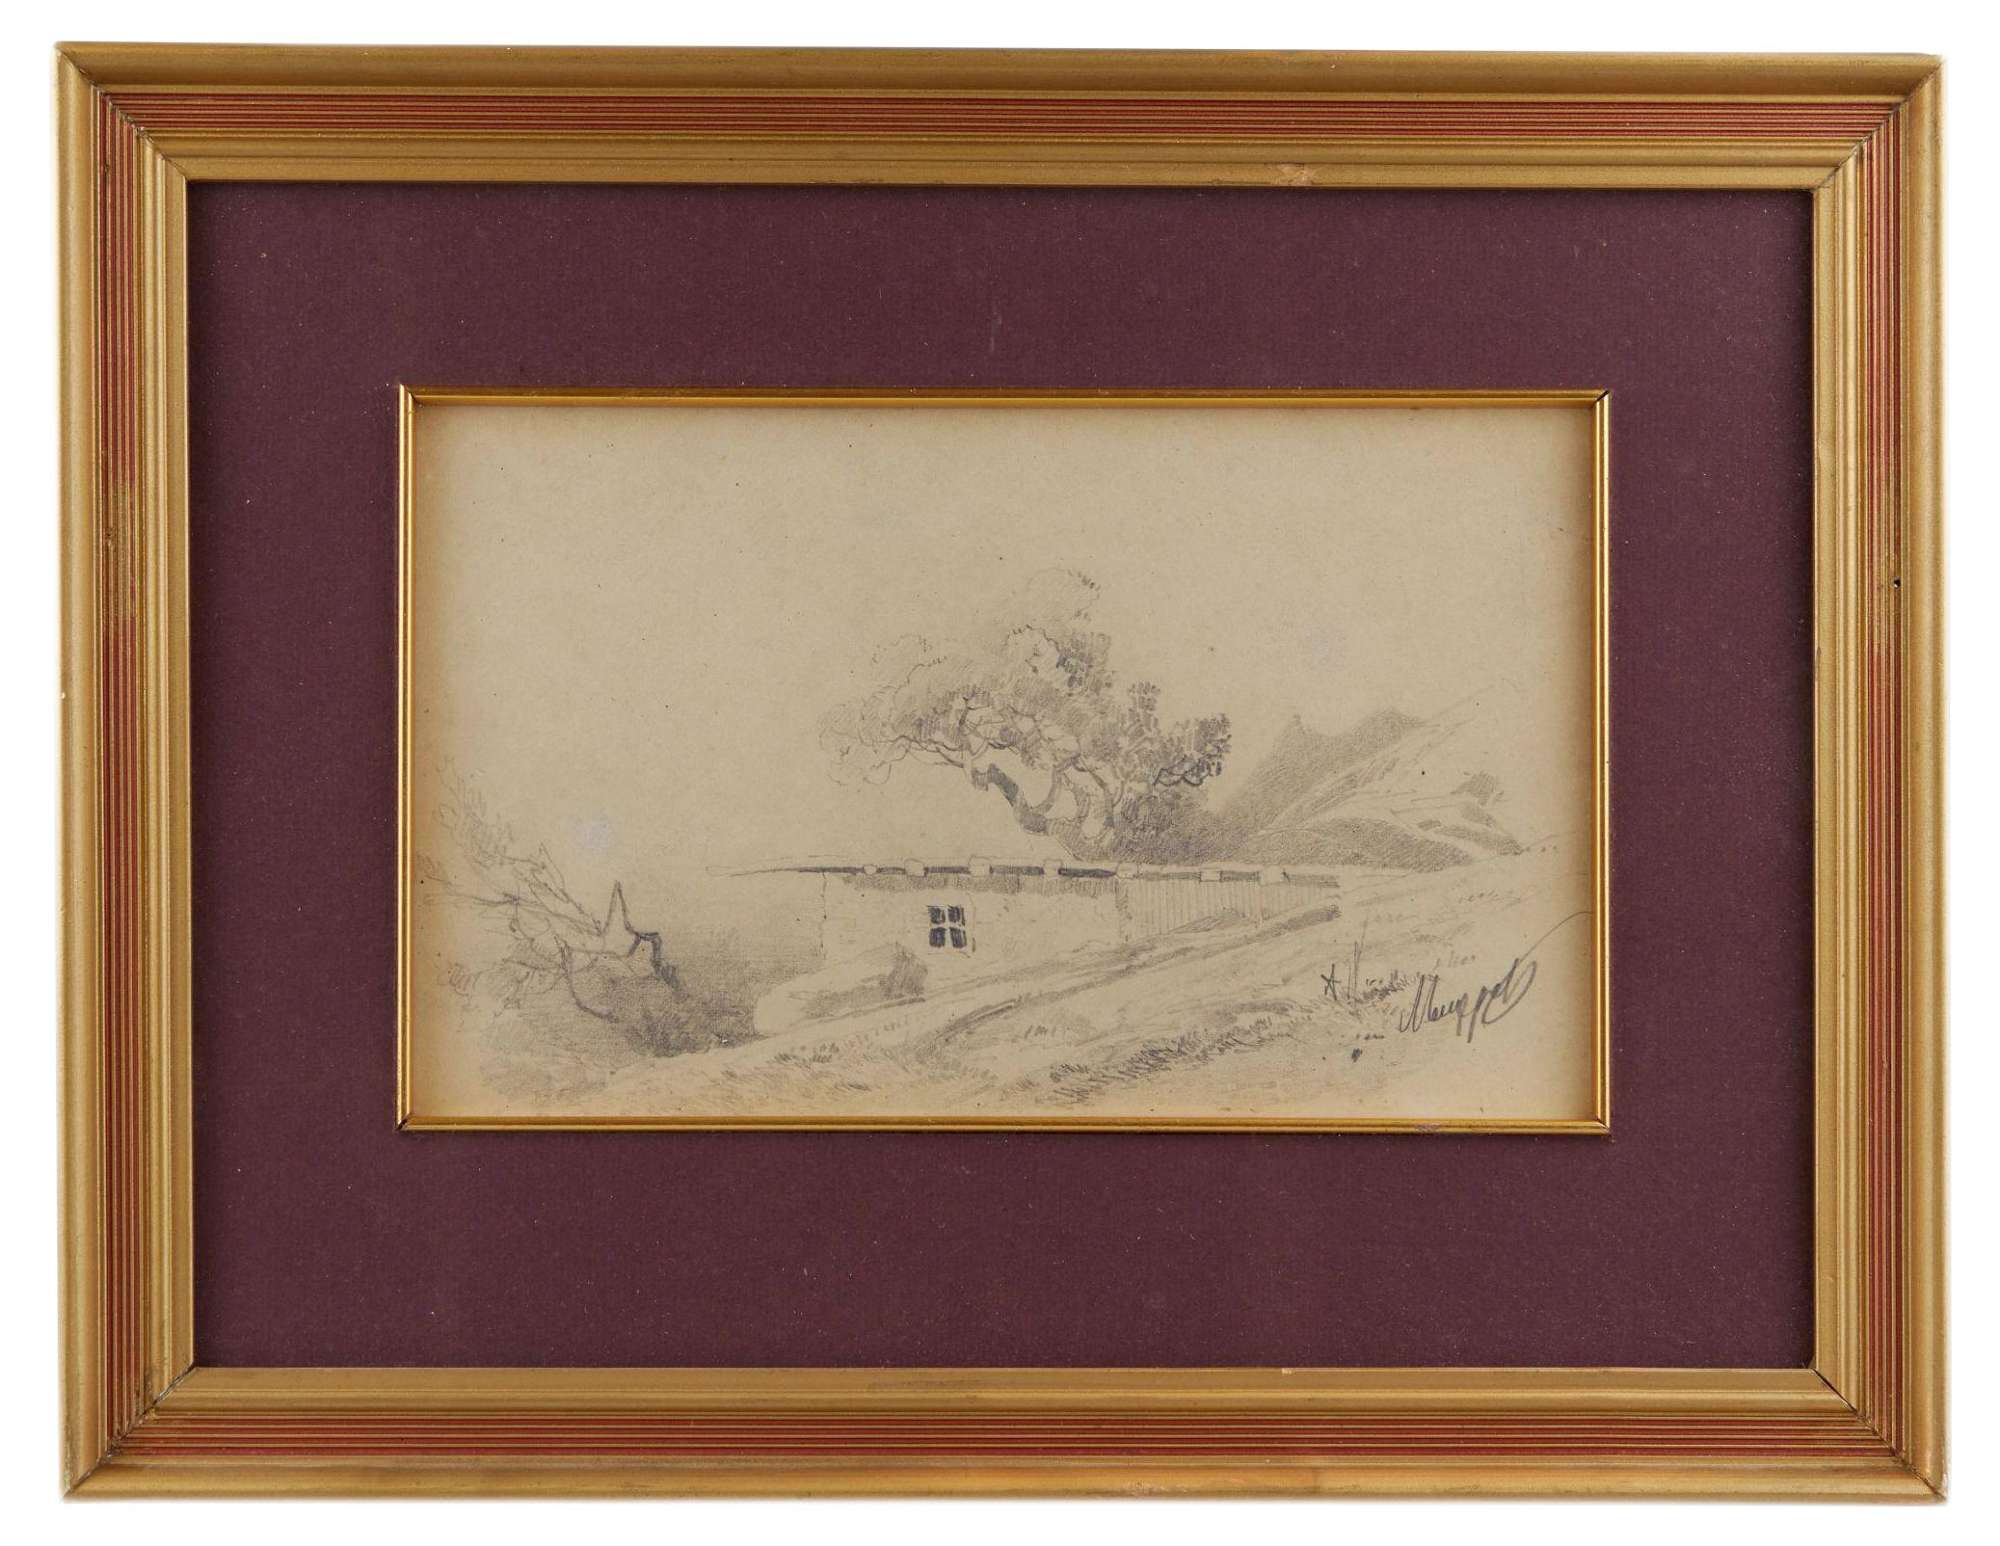 Meshchersky Arseny Ivanovich, Crimean Landscape, 19th-Century, Pencil on Paper, Framed